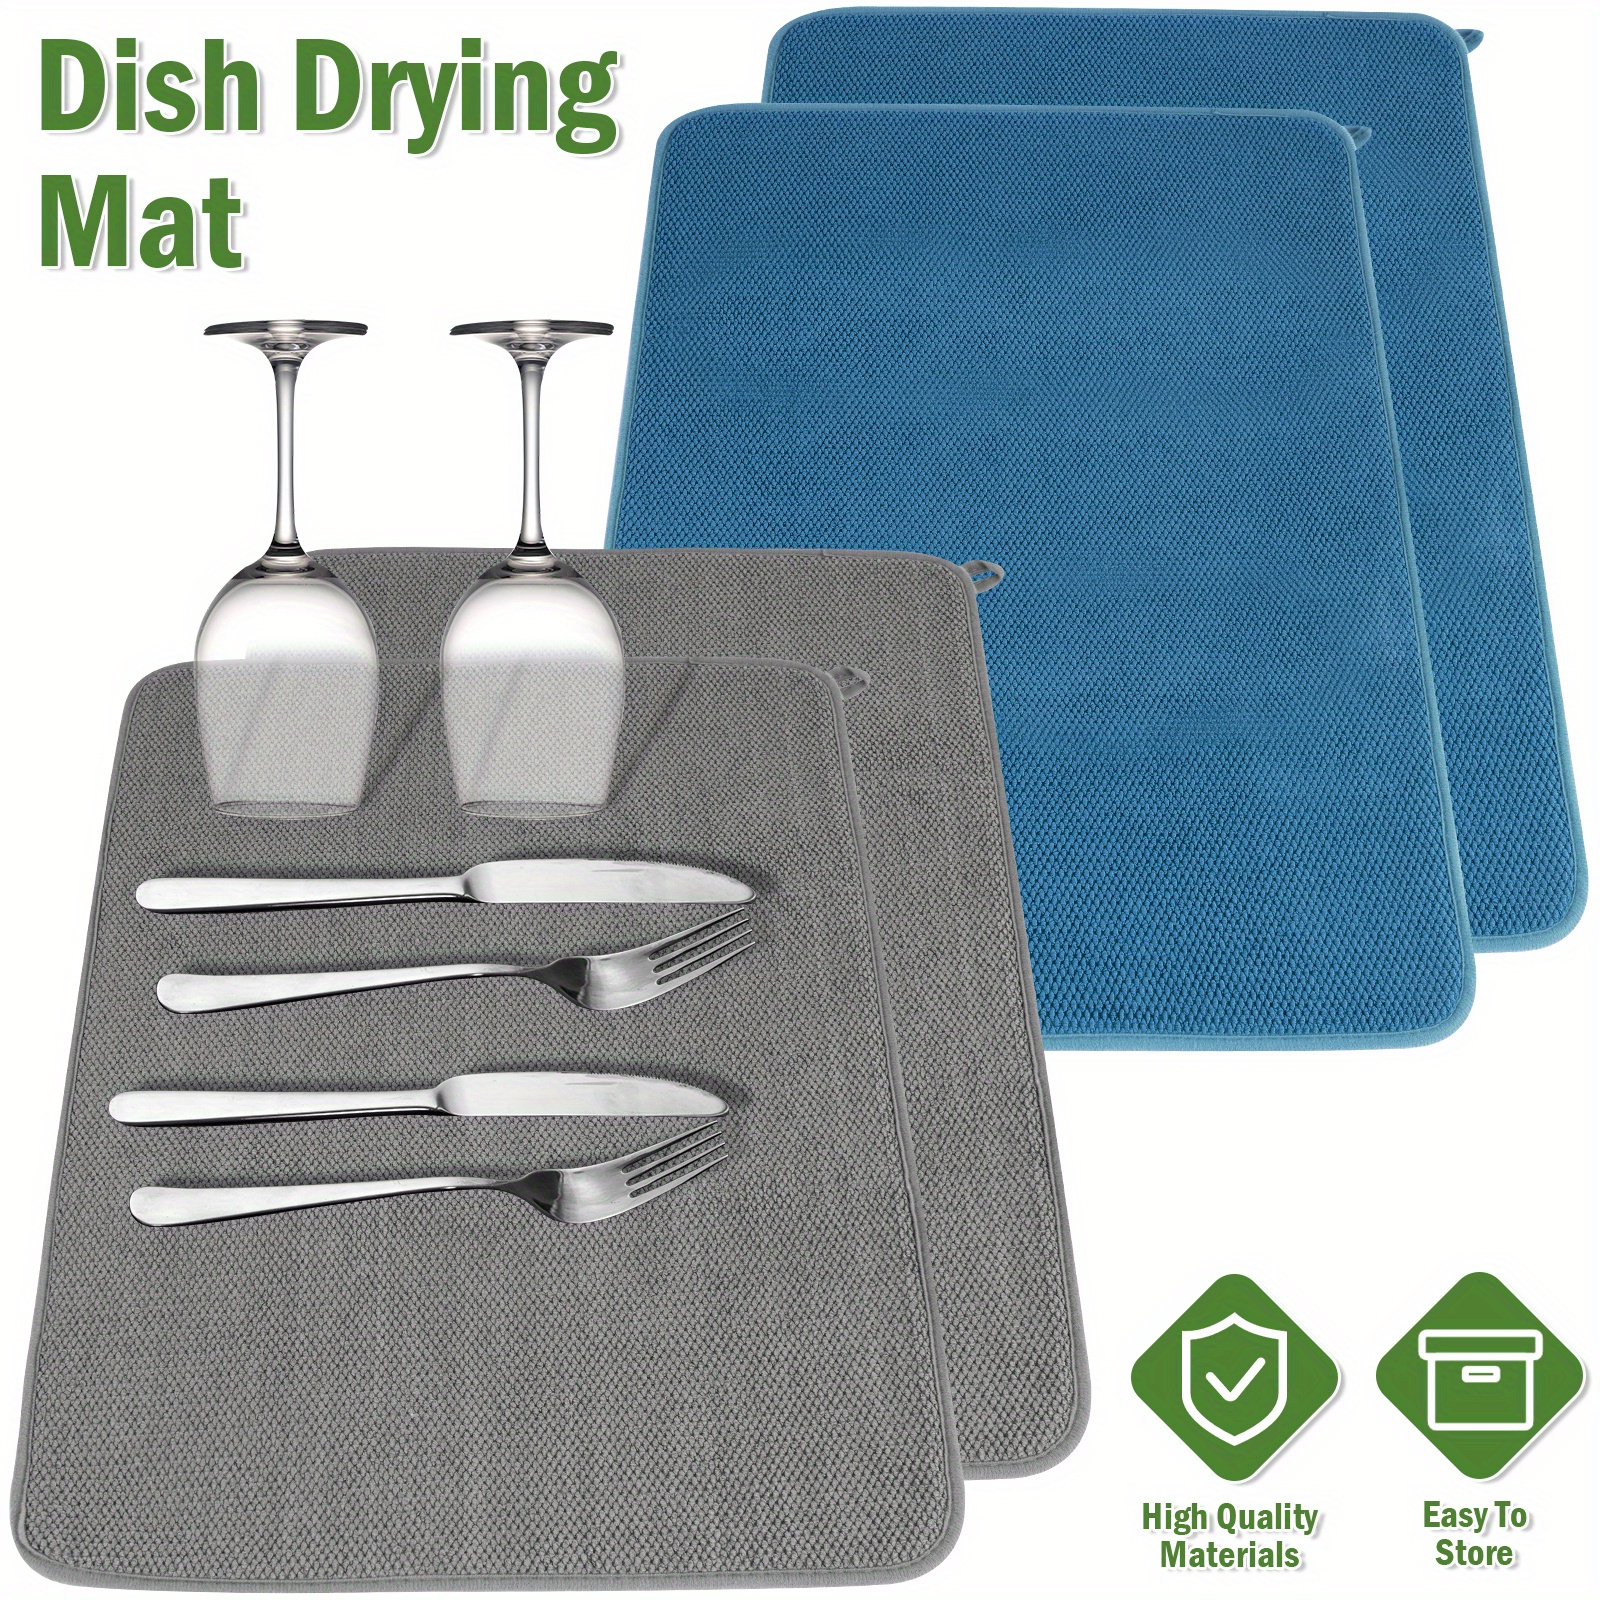 Dish Drying Mats